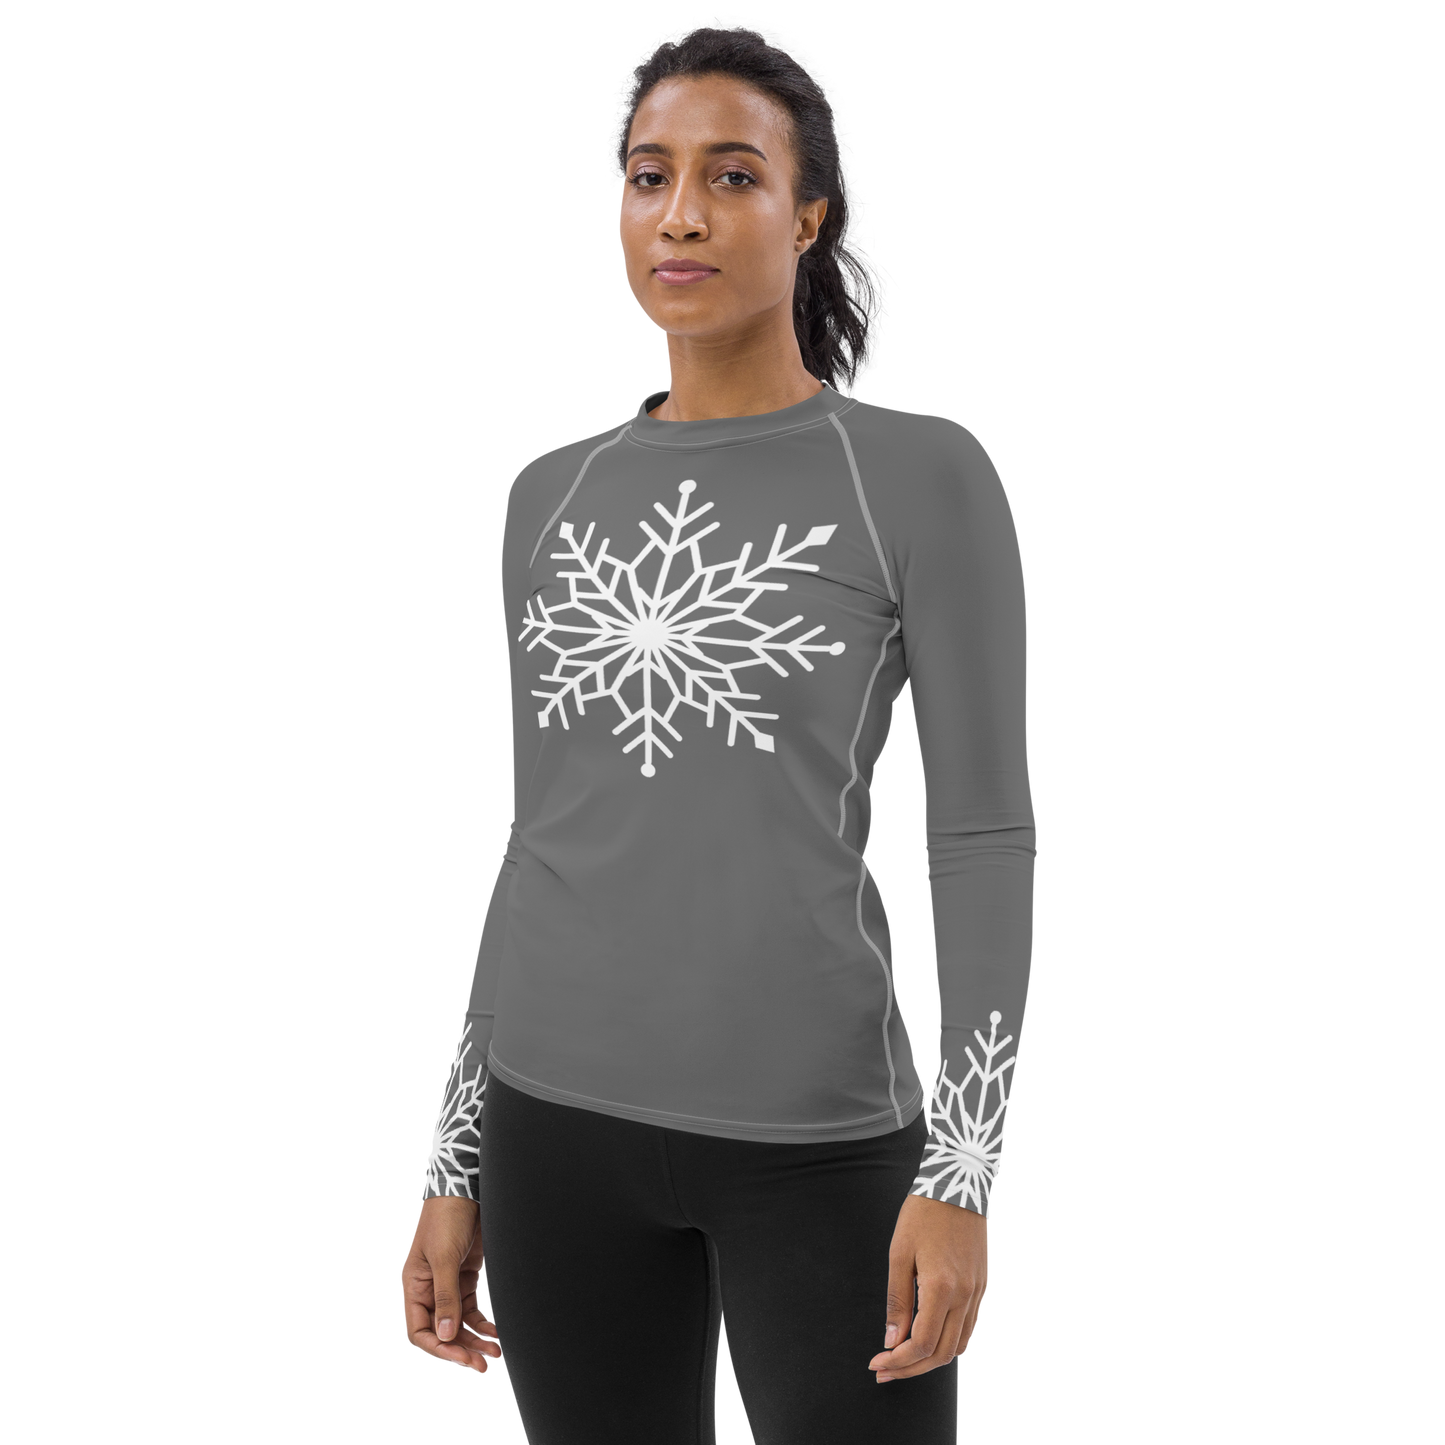 Winter Snowflake Top, White Snowflake on Graphite Gray Women's Rash Guard, Holiday Top